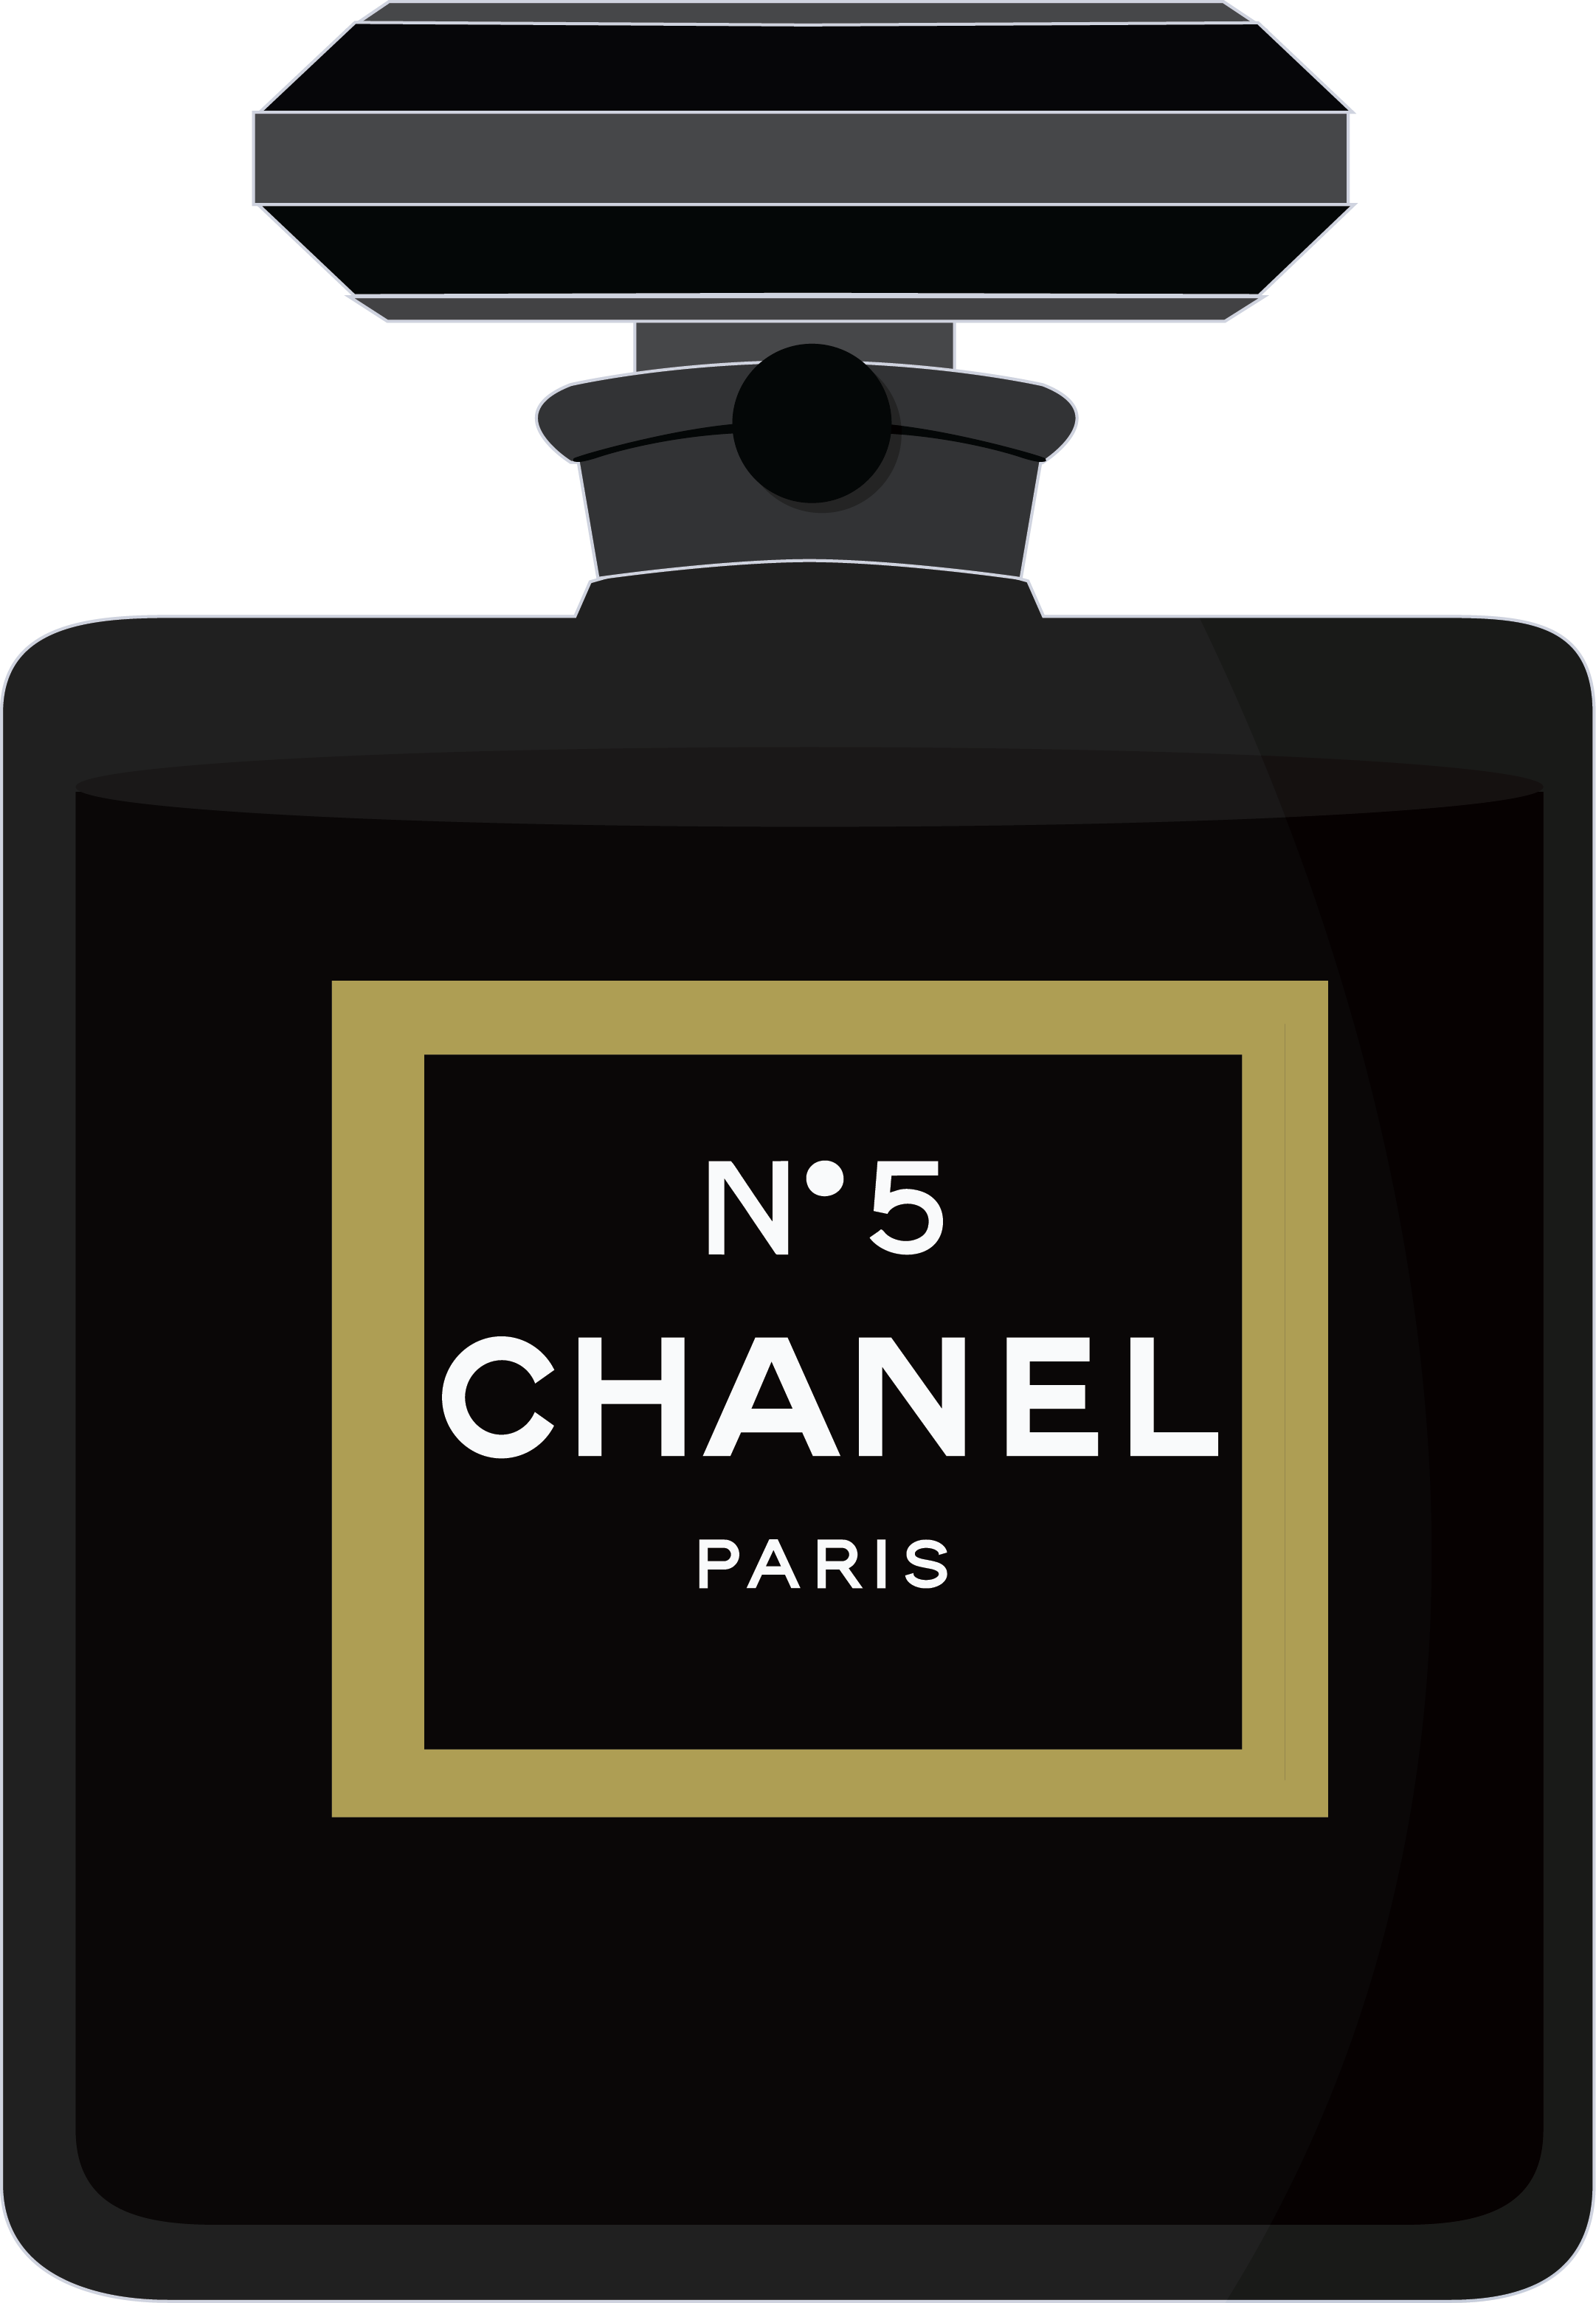 No. Fashion Chanel Designer Perfume HD Image Free PNG PNG Image